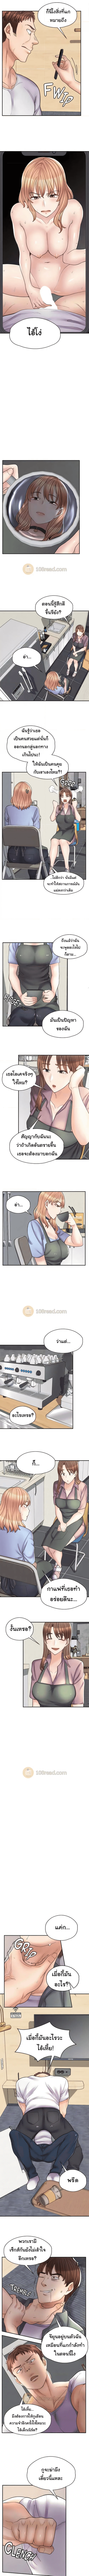 Erotic Manga Café Girls 11 (2)